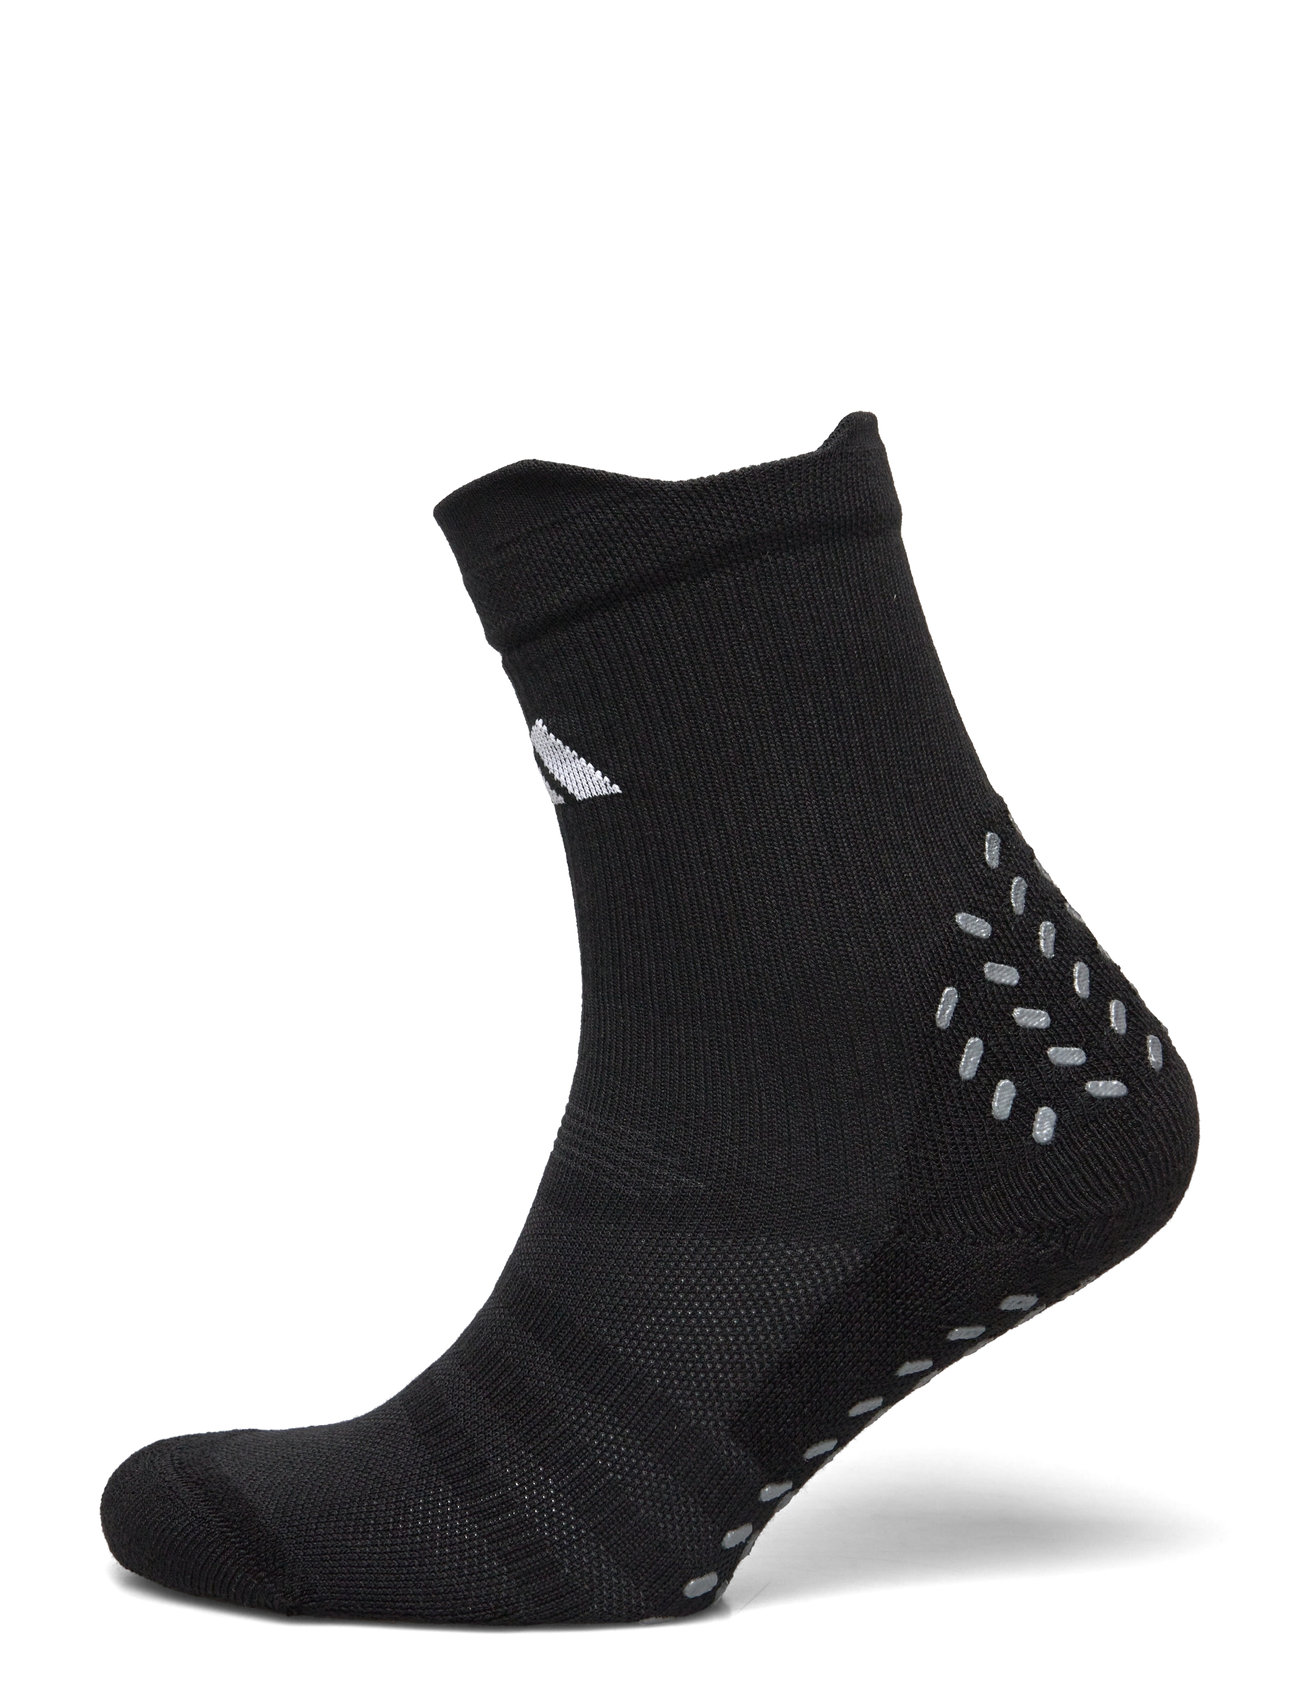 Adidas Football Grip Printed Crew Performance Socks Cushi D Sport Socks Regular Socks Black Adidas Performance